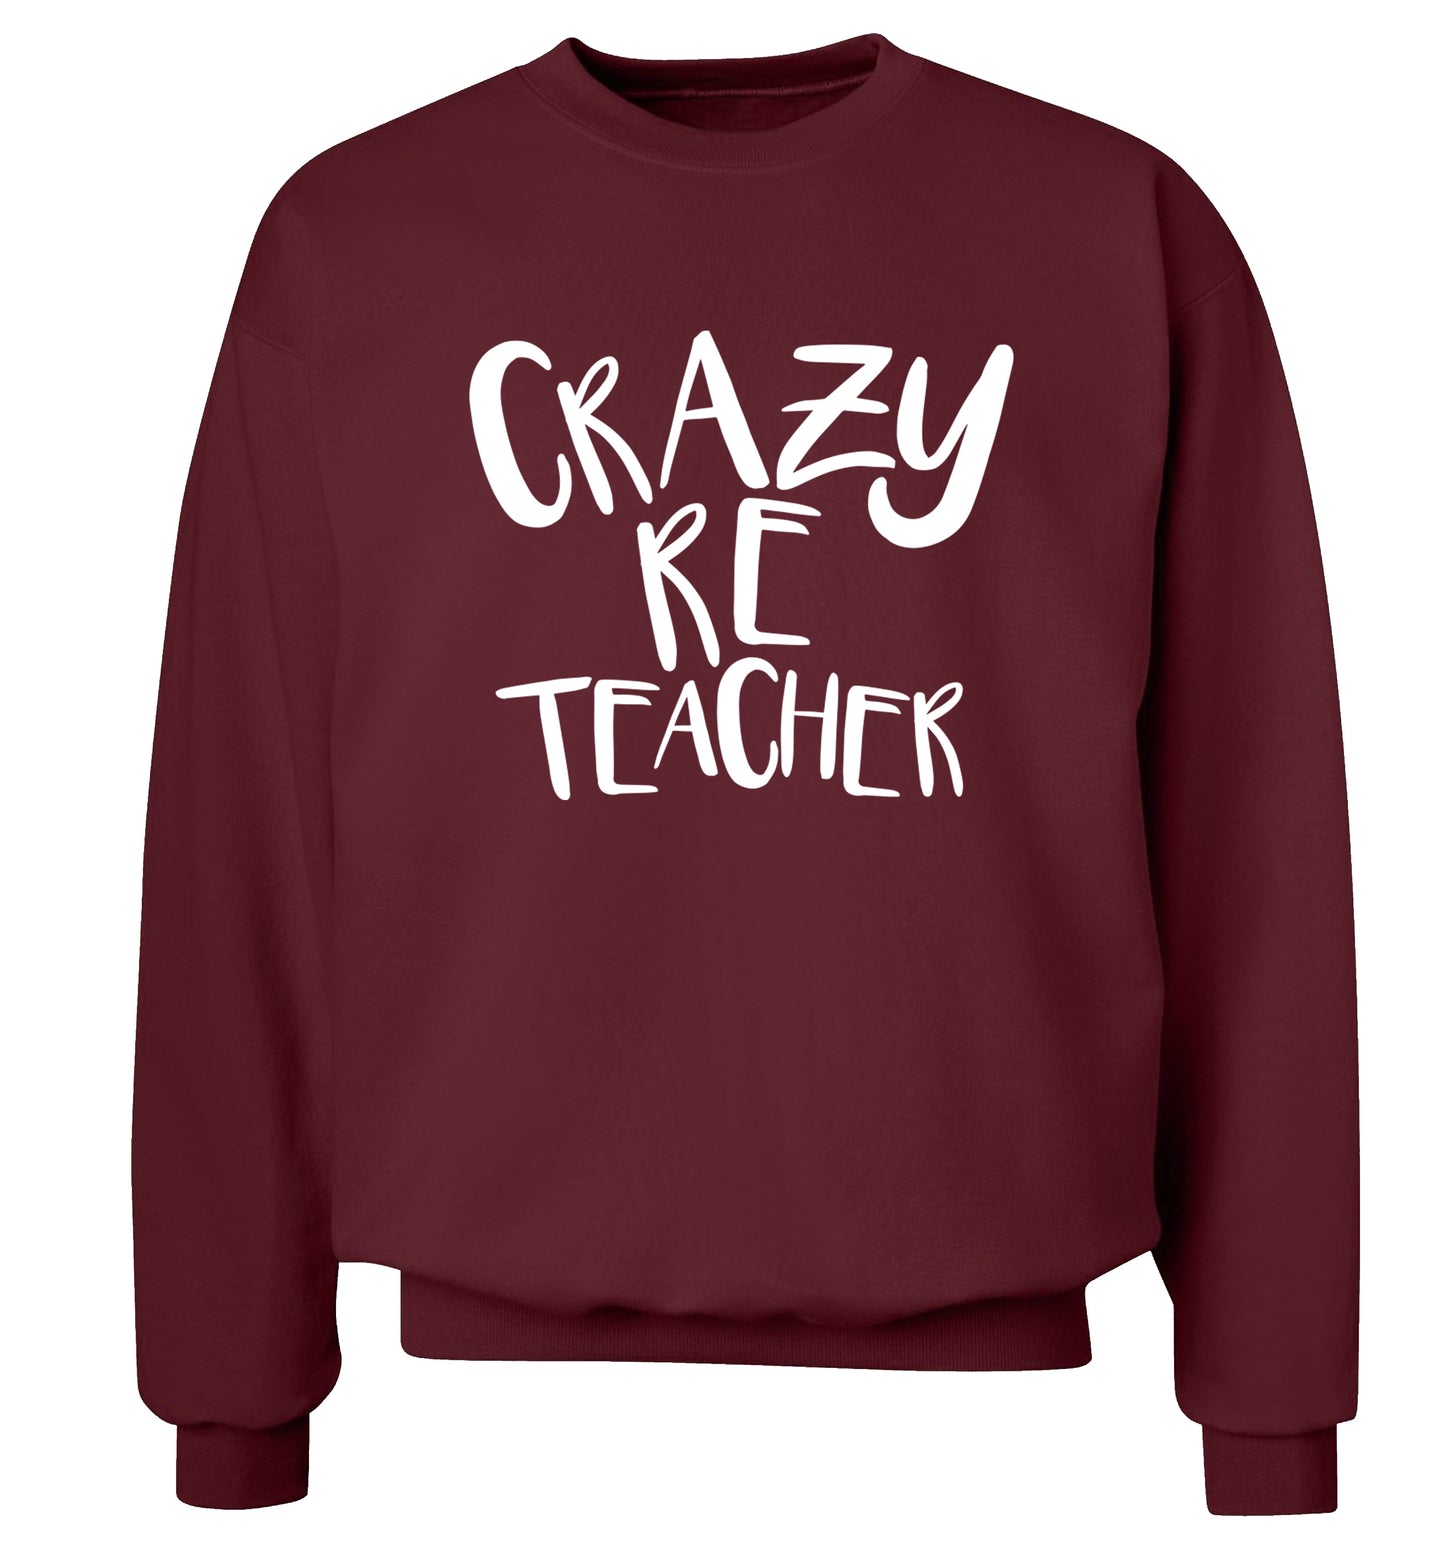 Crazy RE teacher Adult's unisex maroon Sweater 2XL